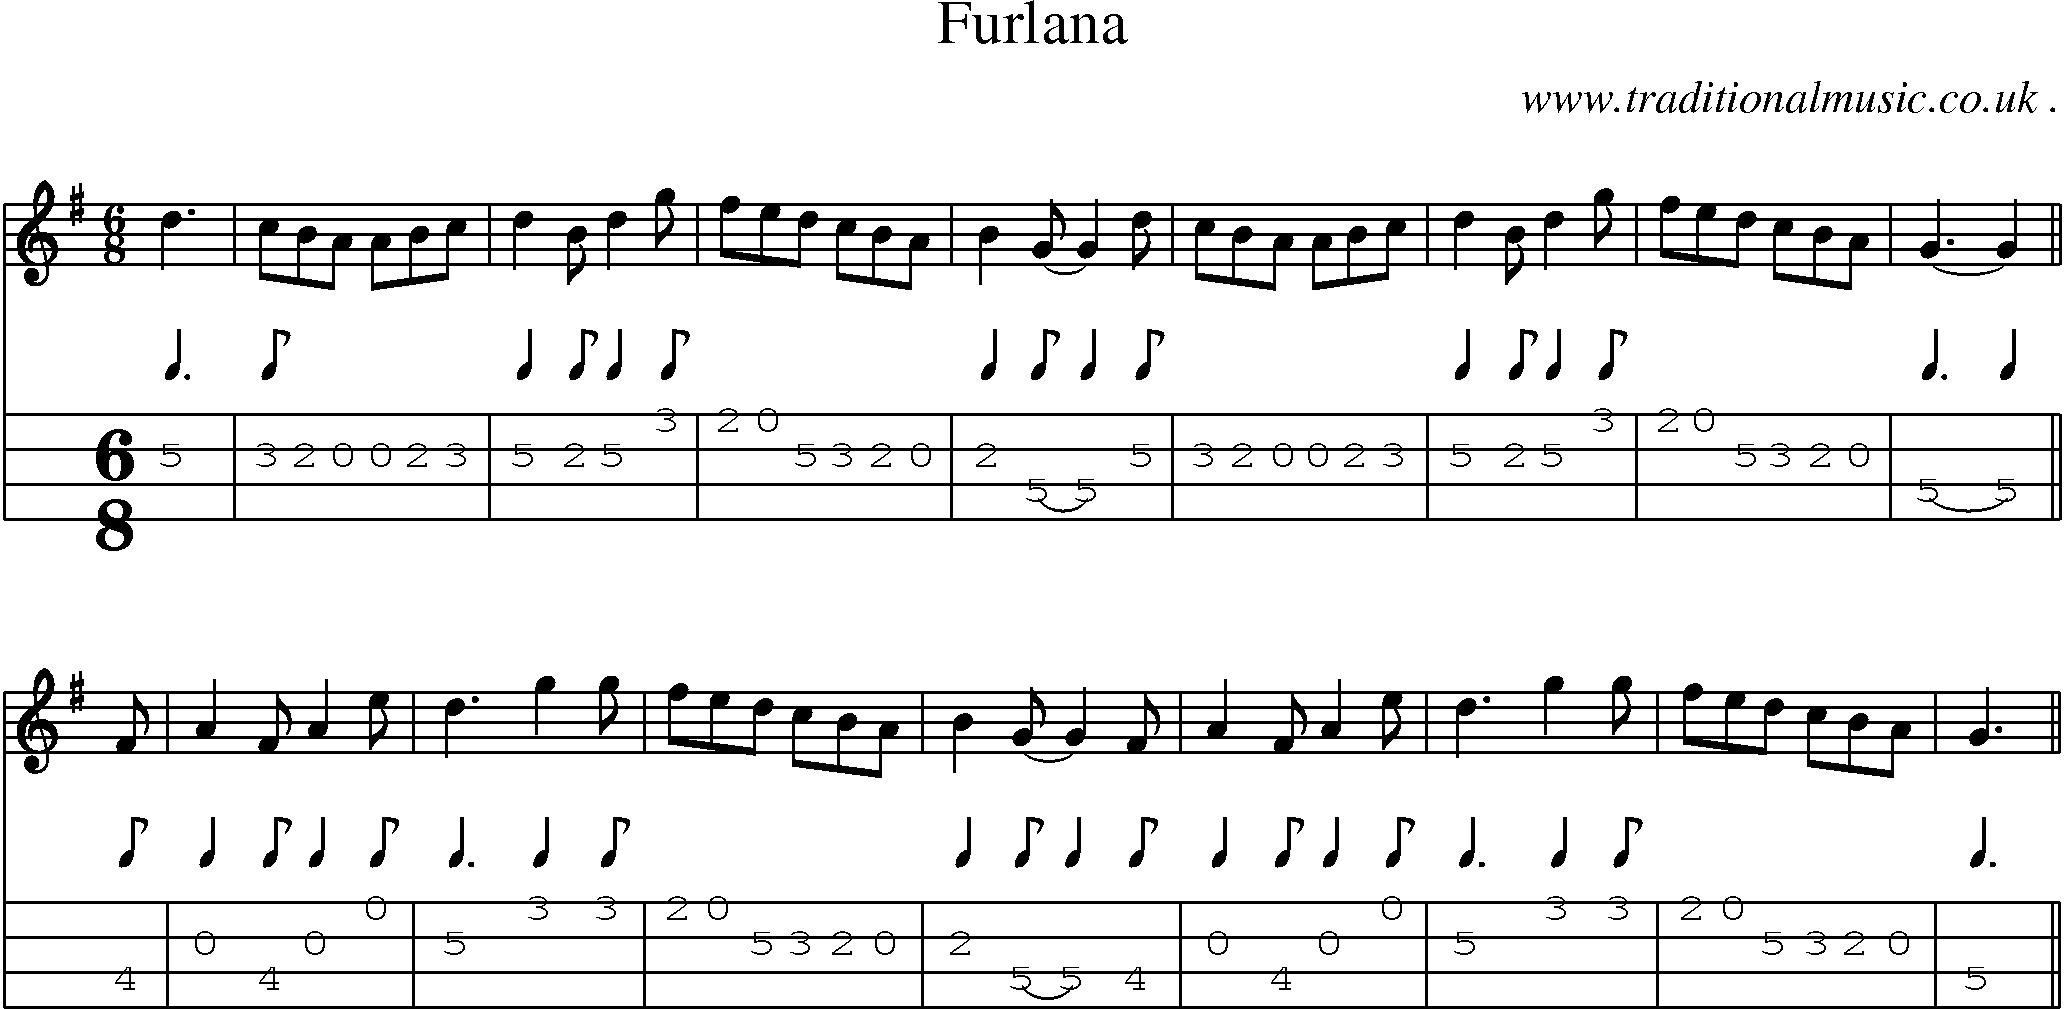 Sheet-Music and Mandolin Tabs for Furlana